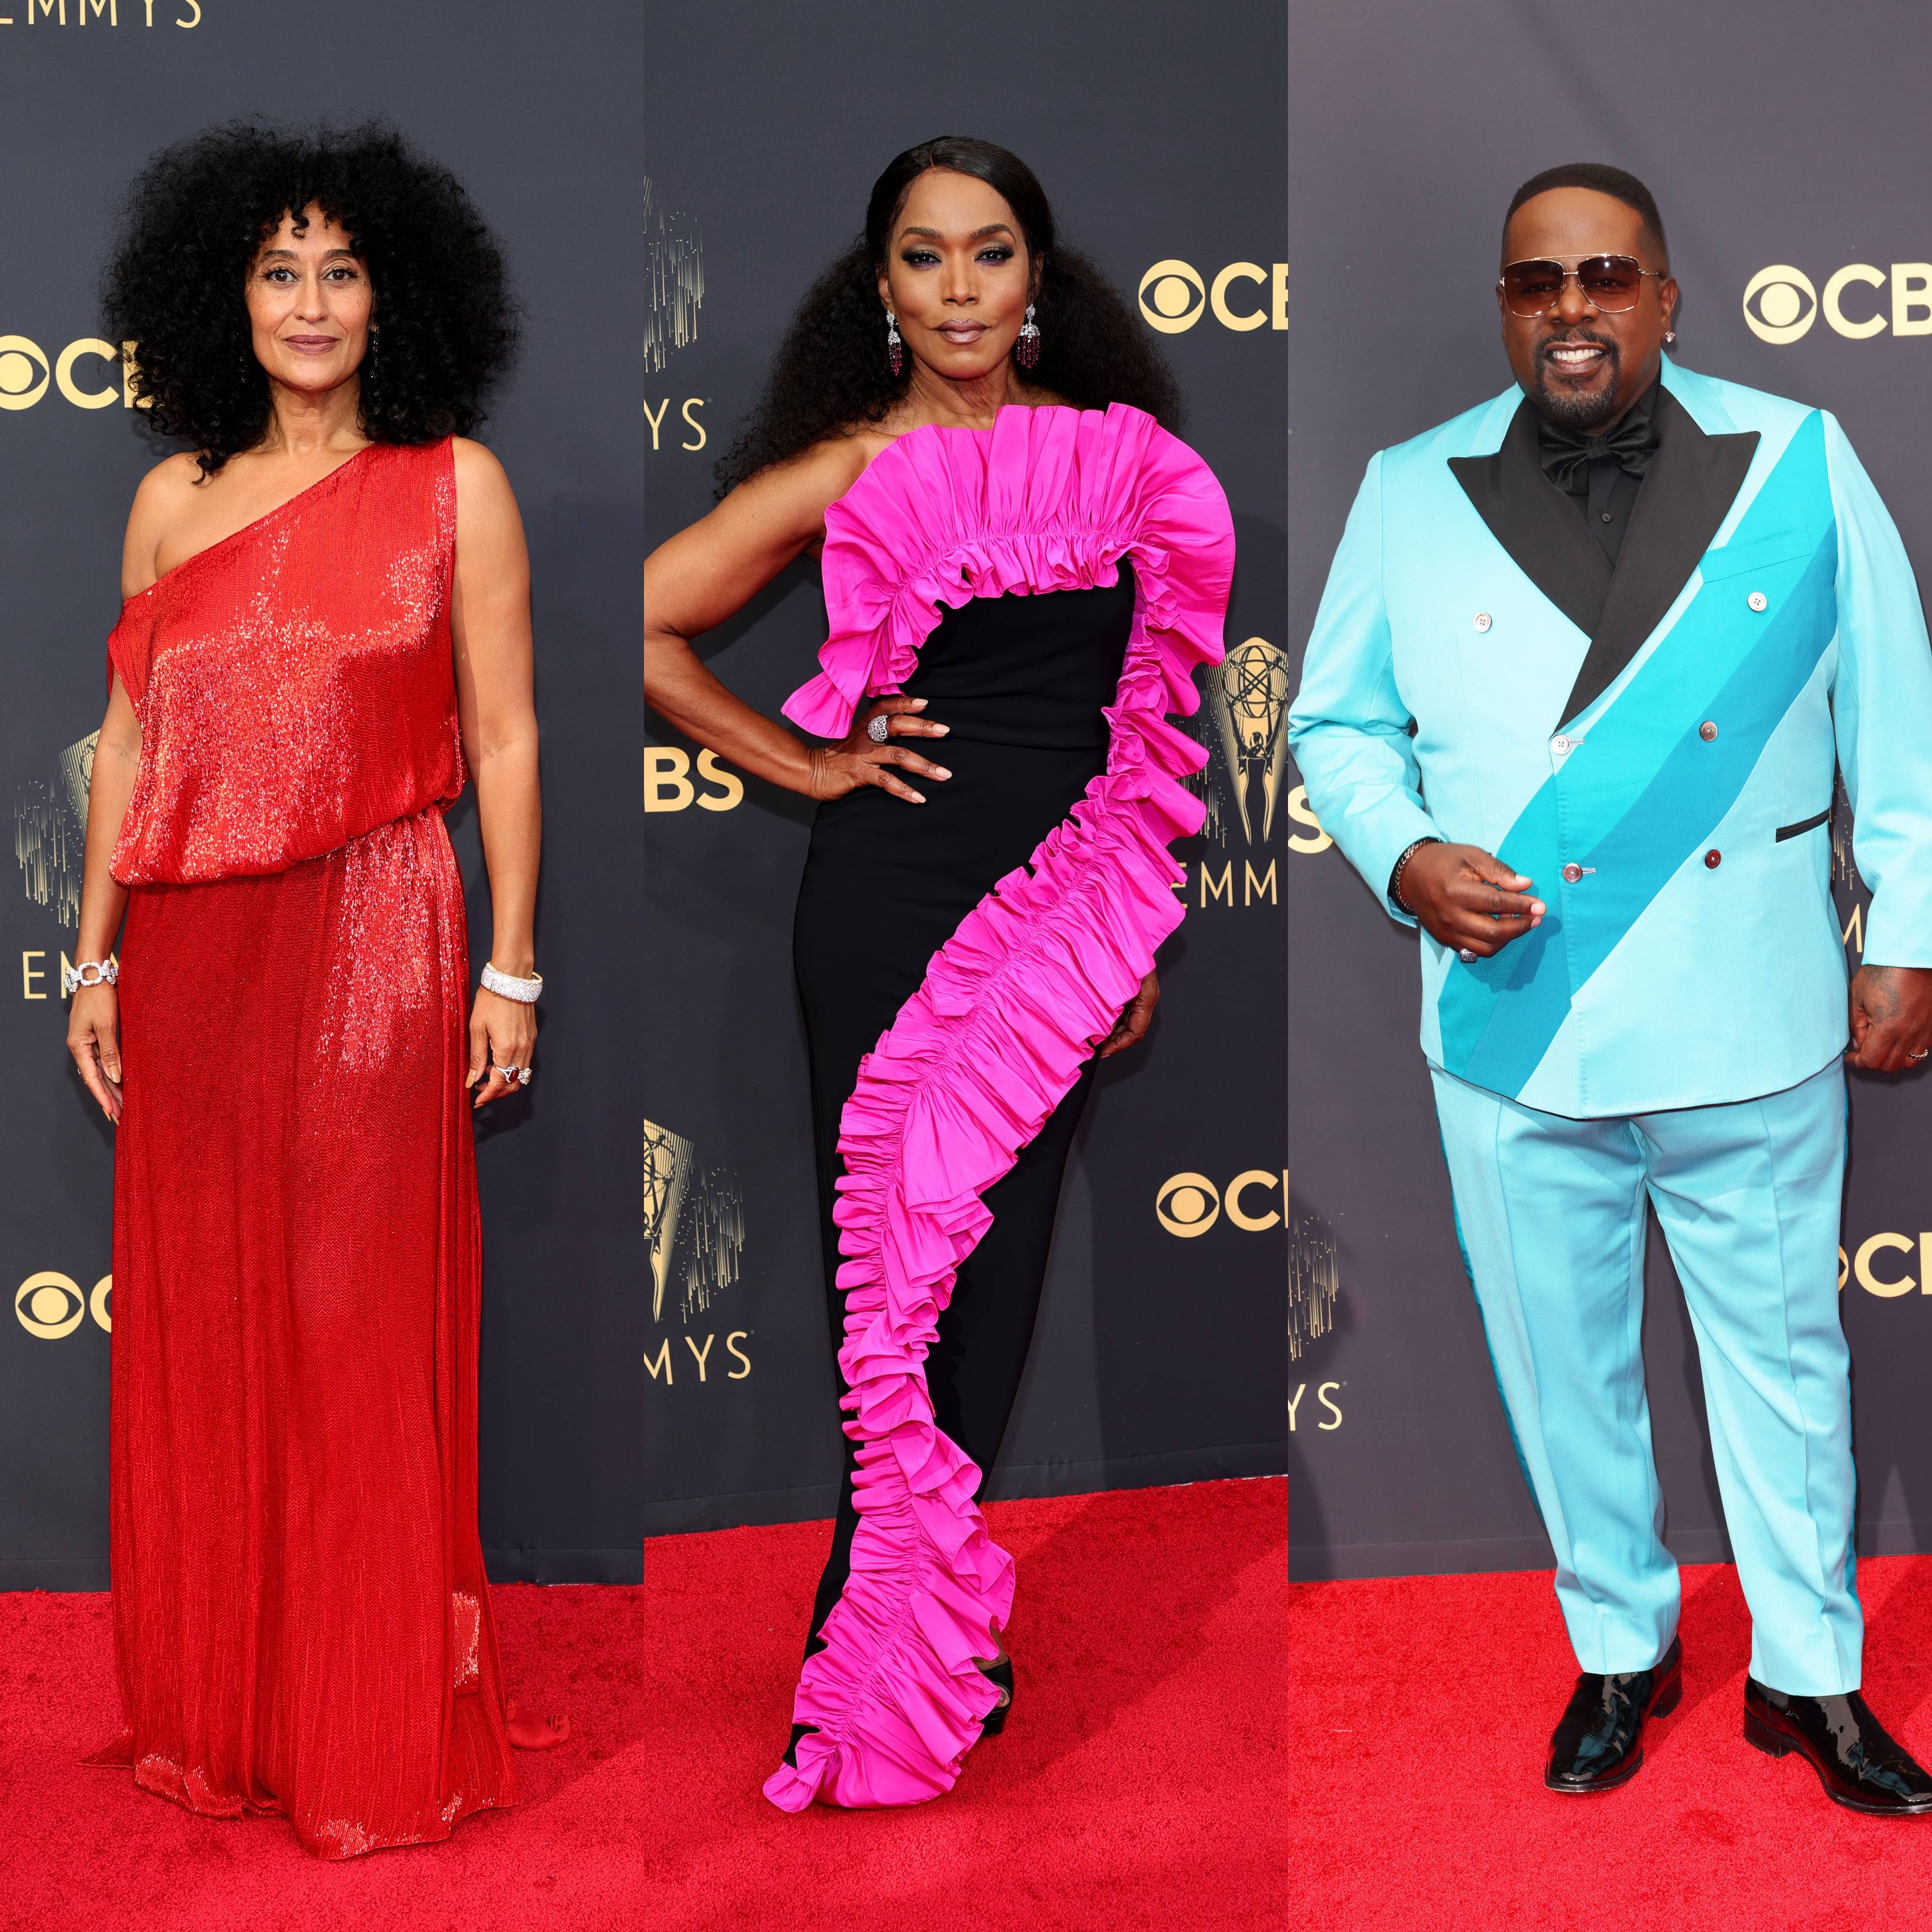 Emmys Red Carpet Fashion